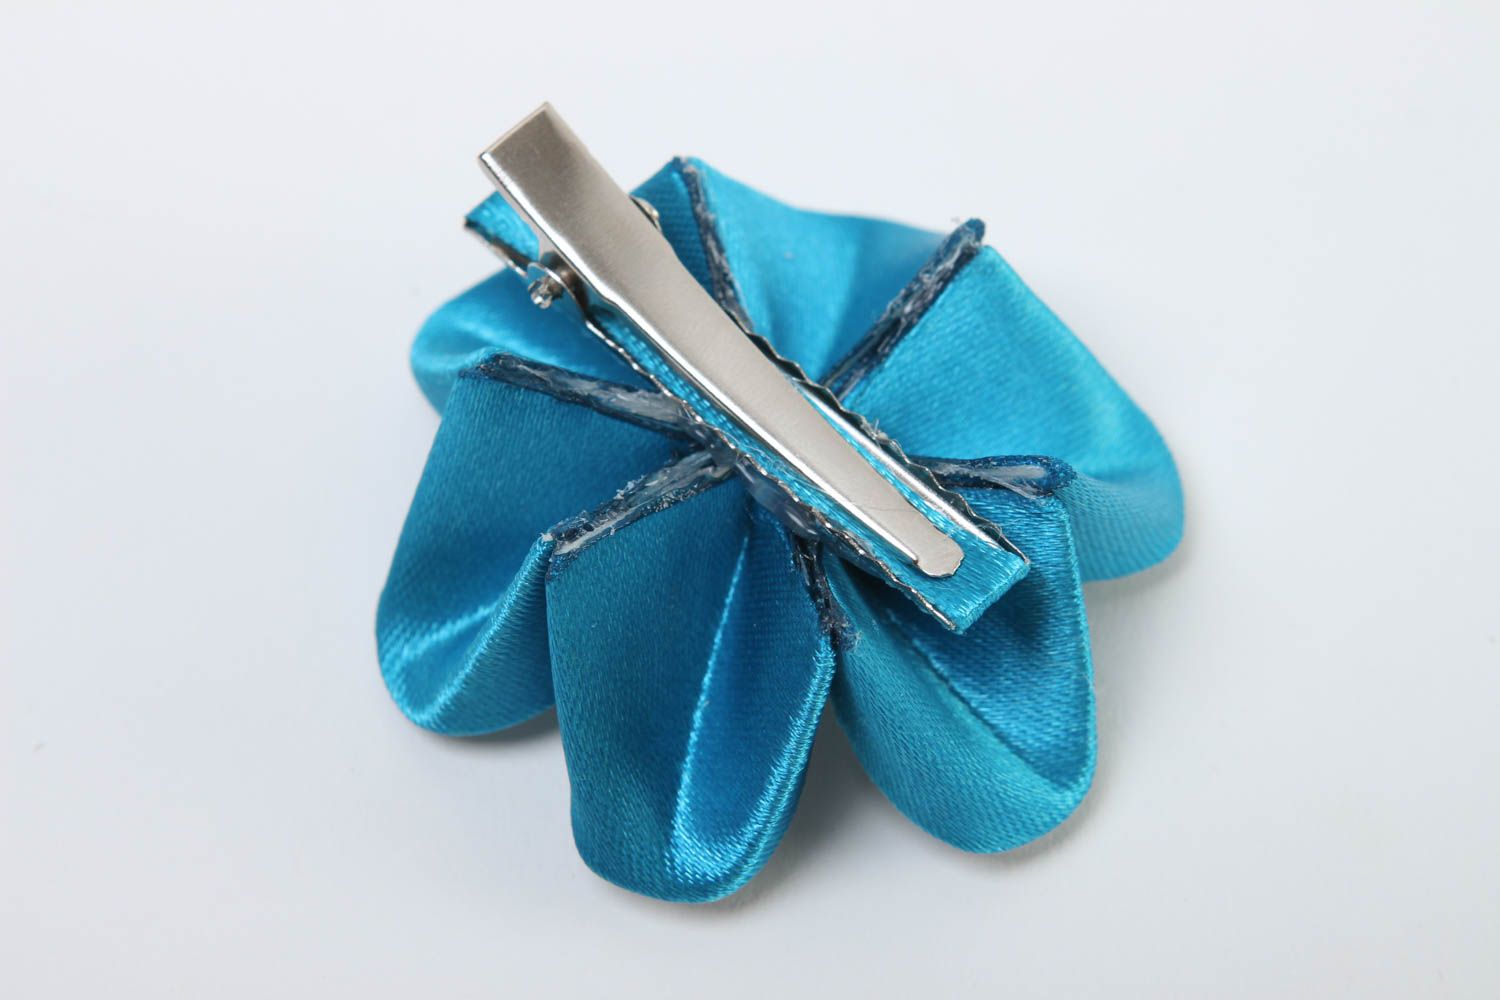 Handmade hair clips designer hair accessory gift ideas unusual gift for girls photo 4